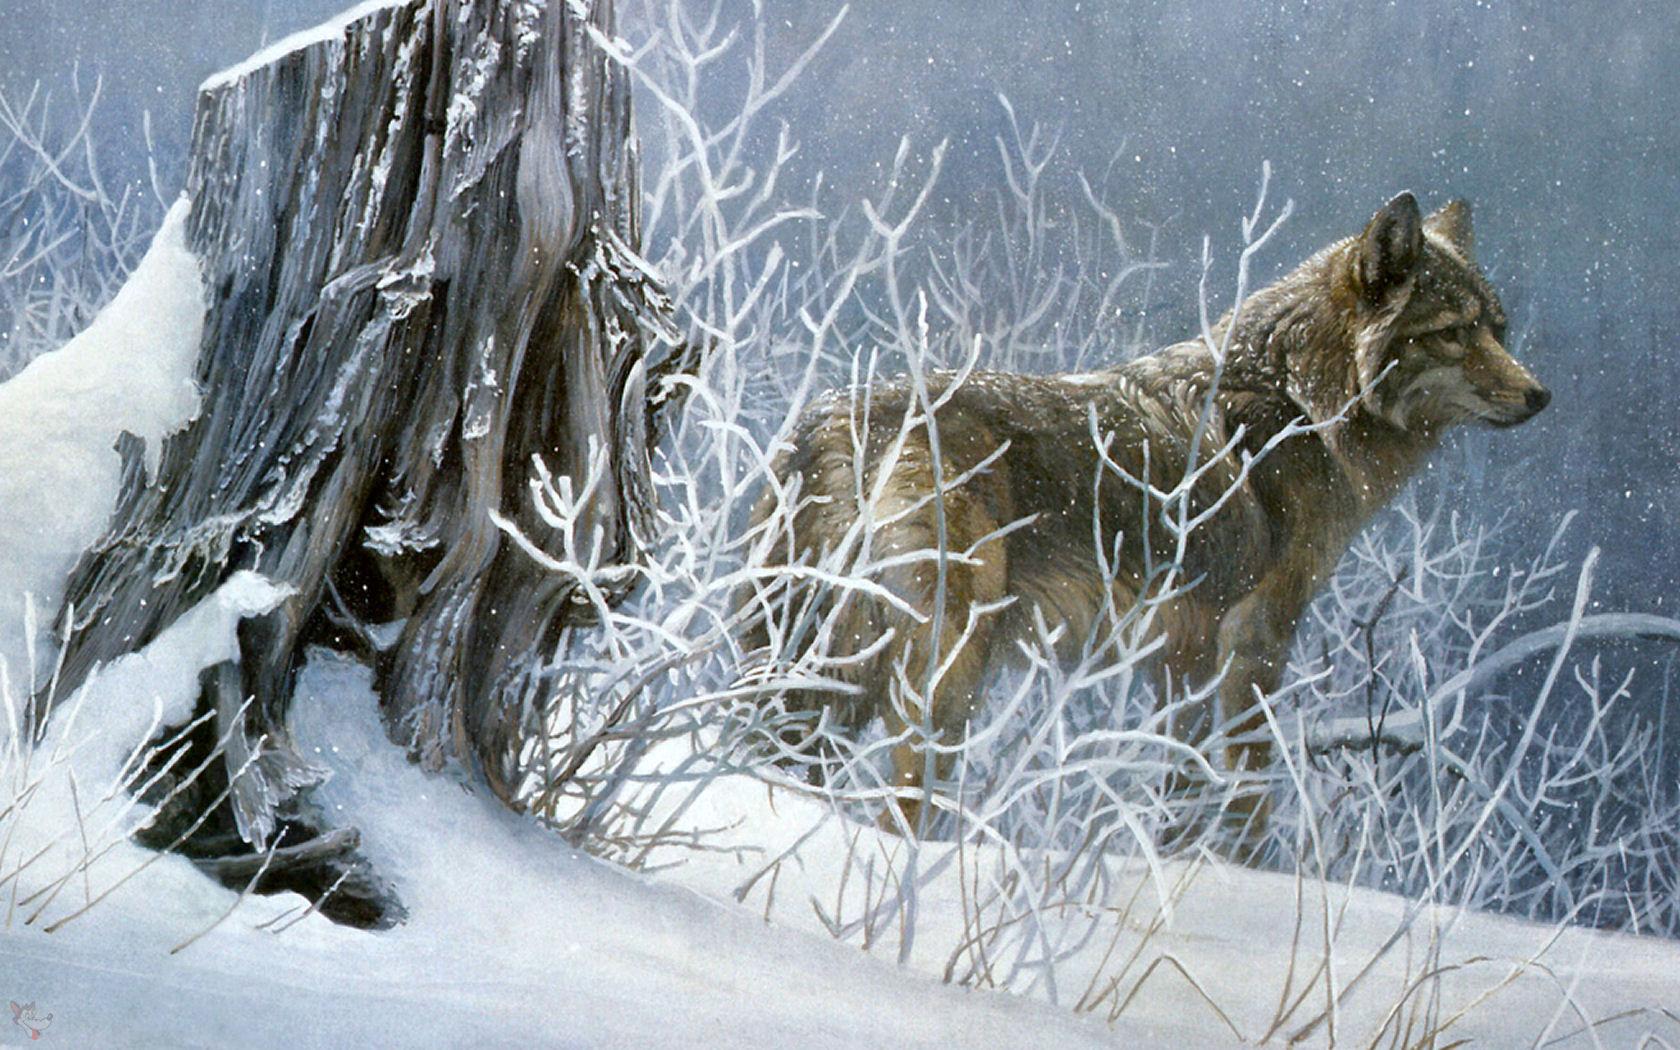 Snowy wolf free desktop background wallpaper image